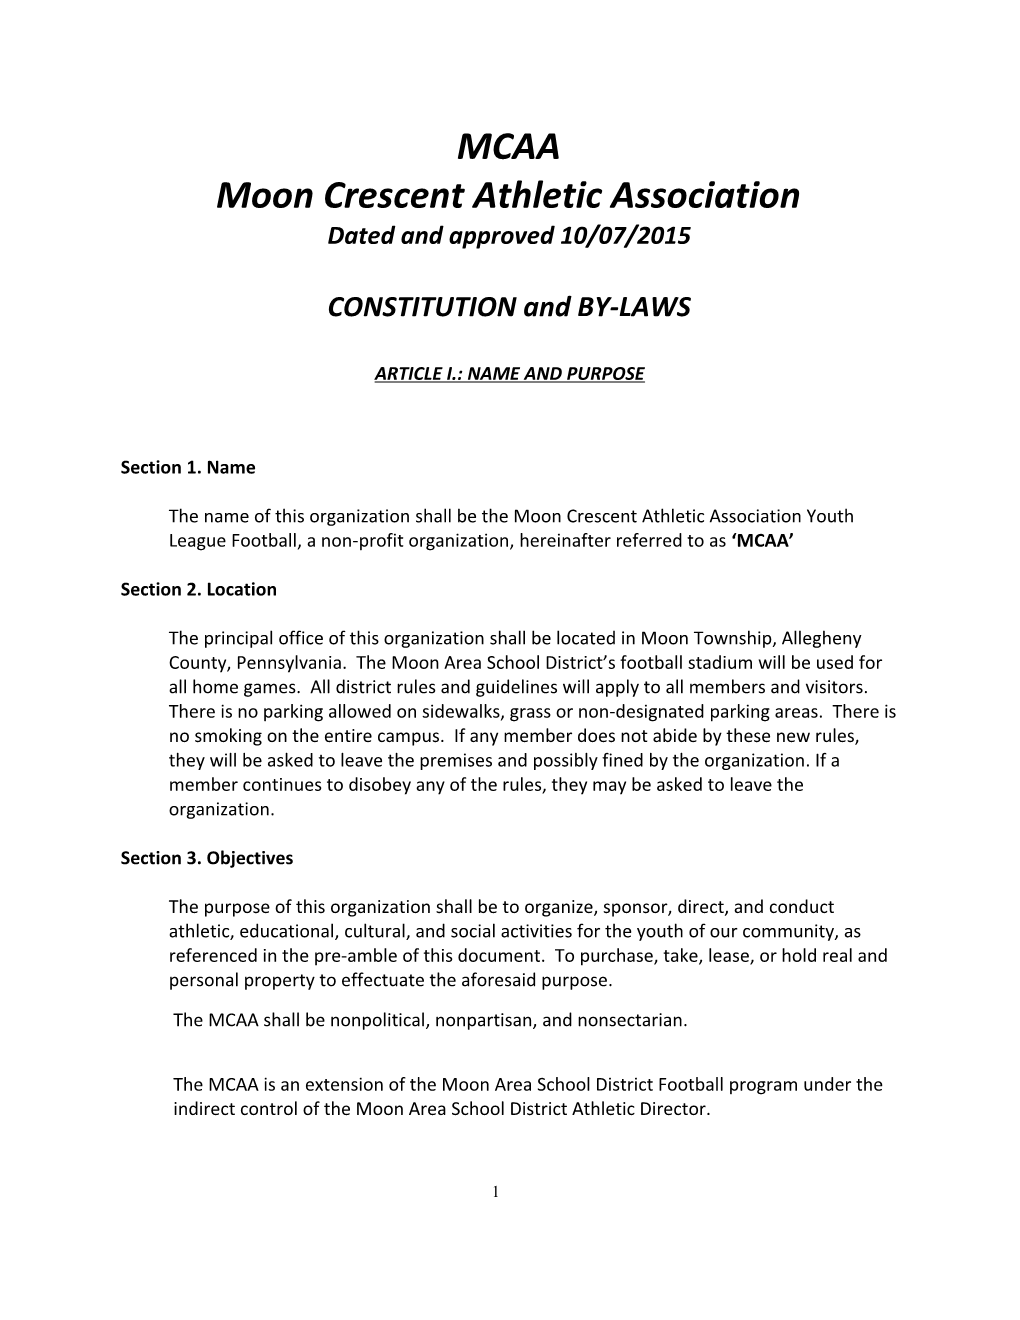 Moon Crescent Athletic Association